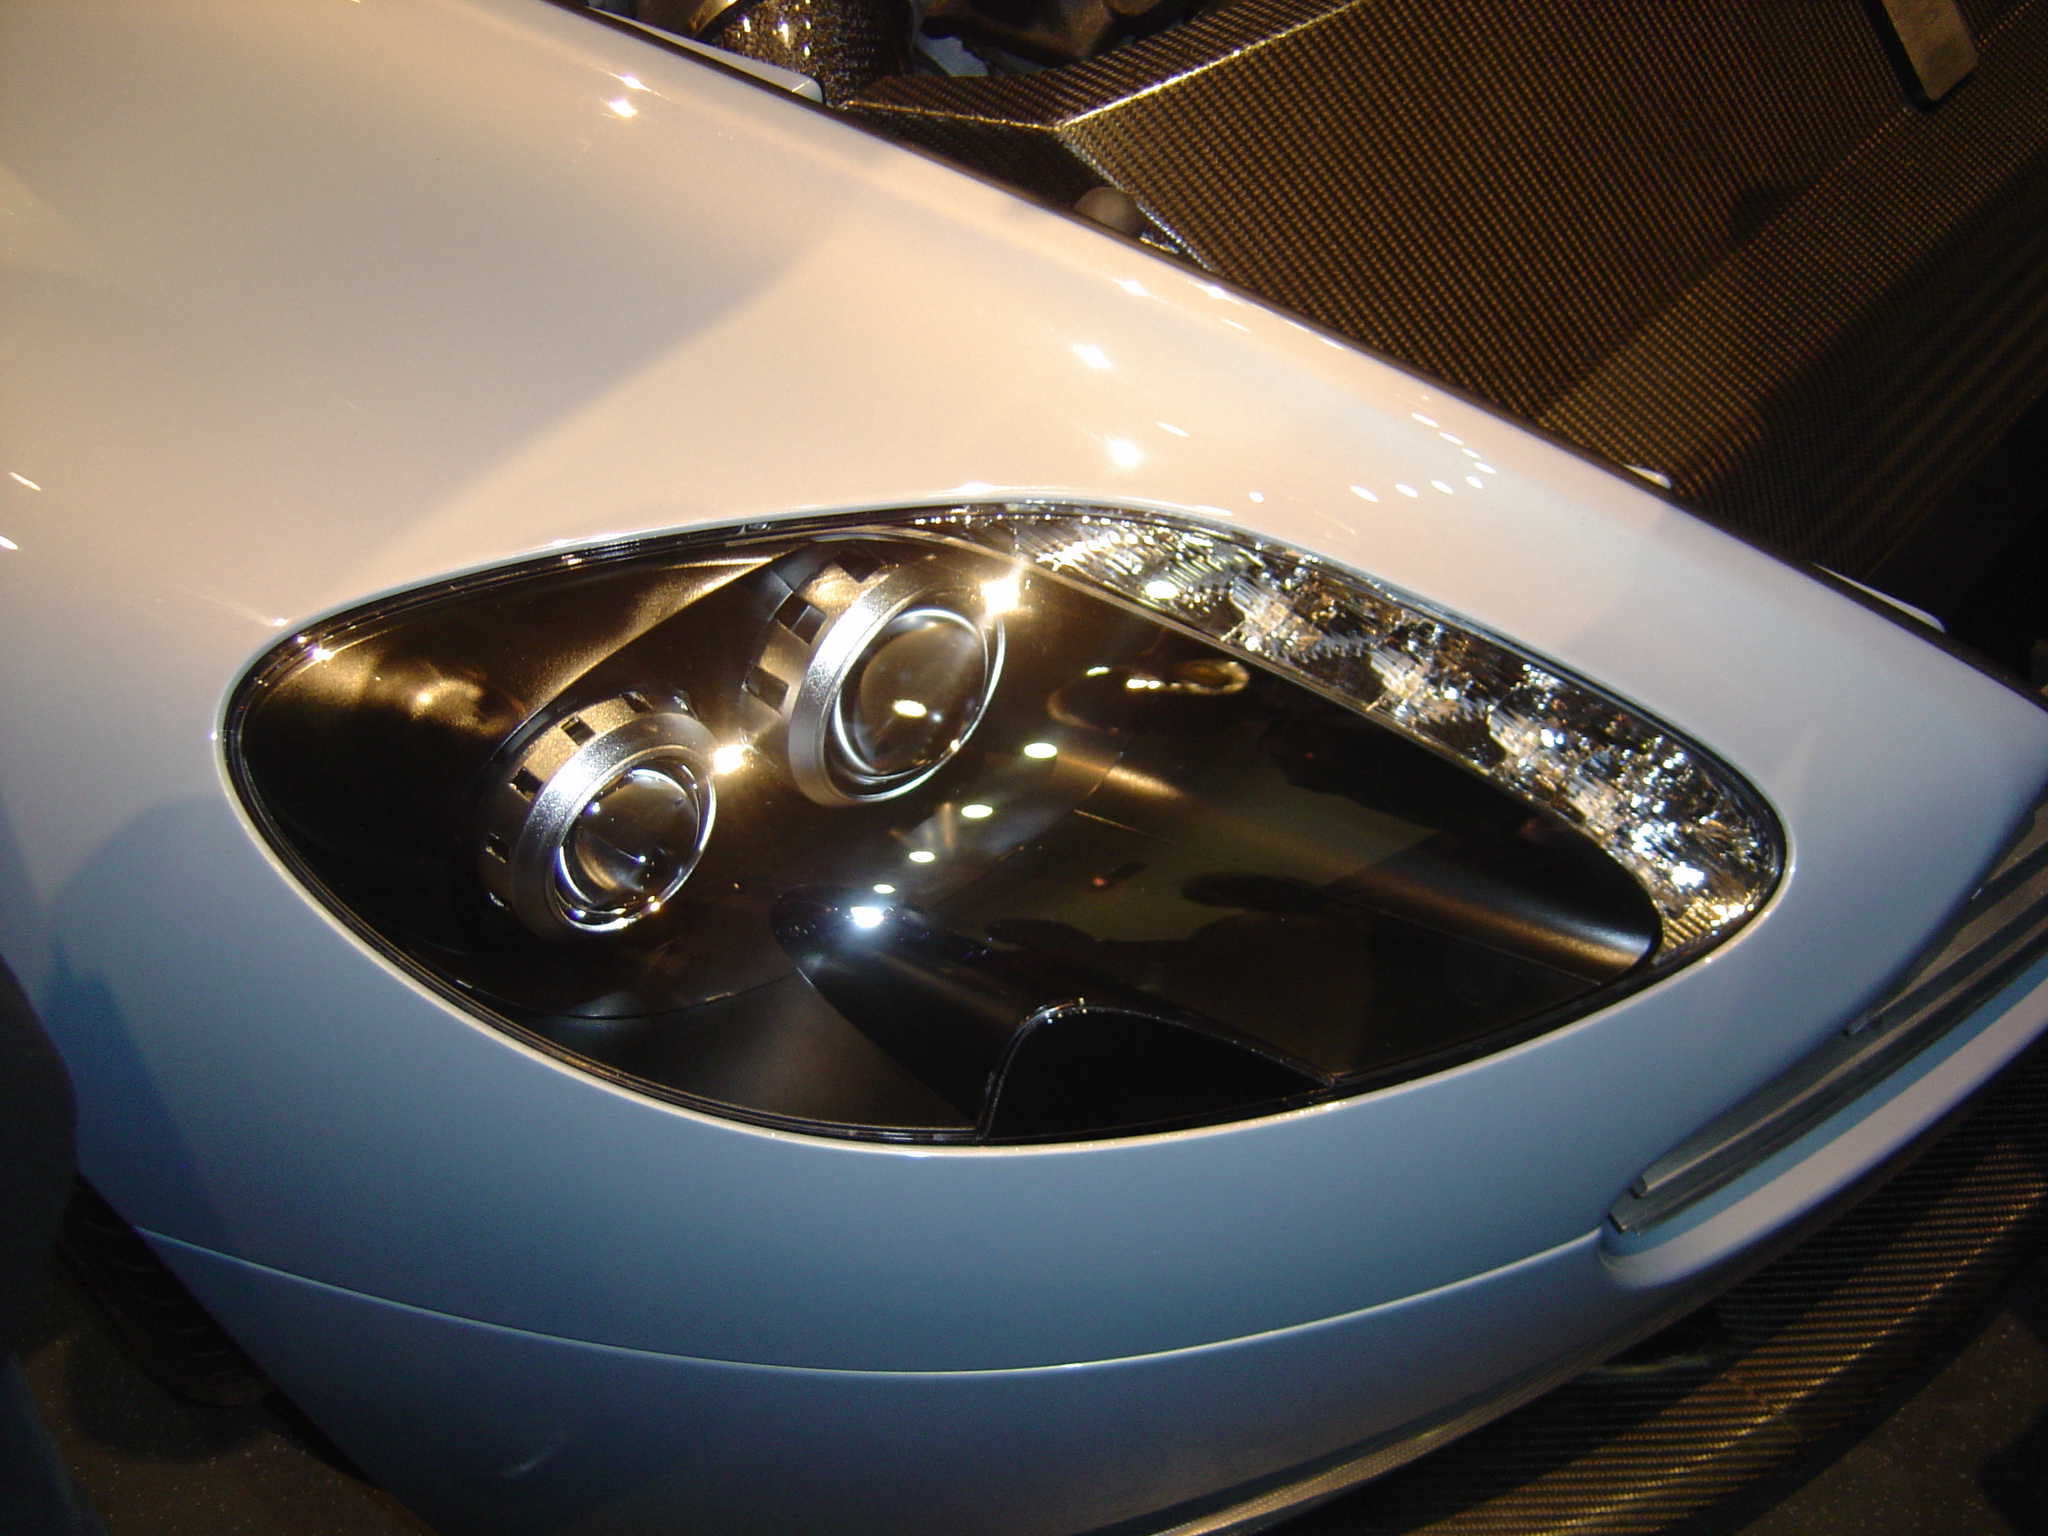 a close up view of a car with chrome details